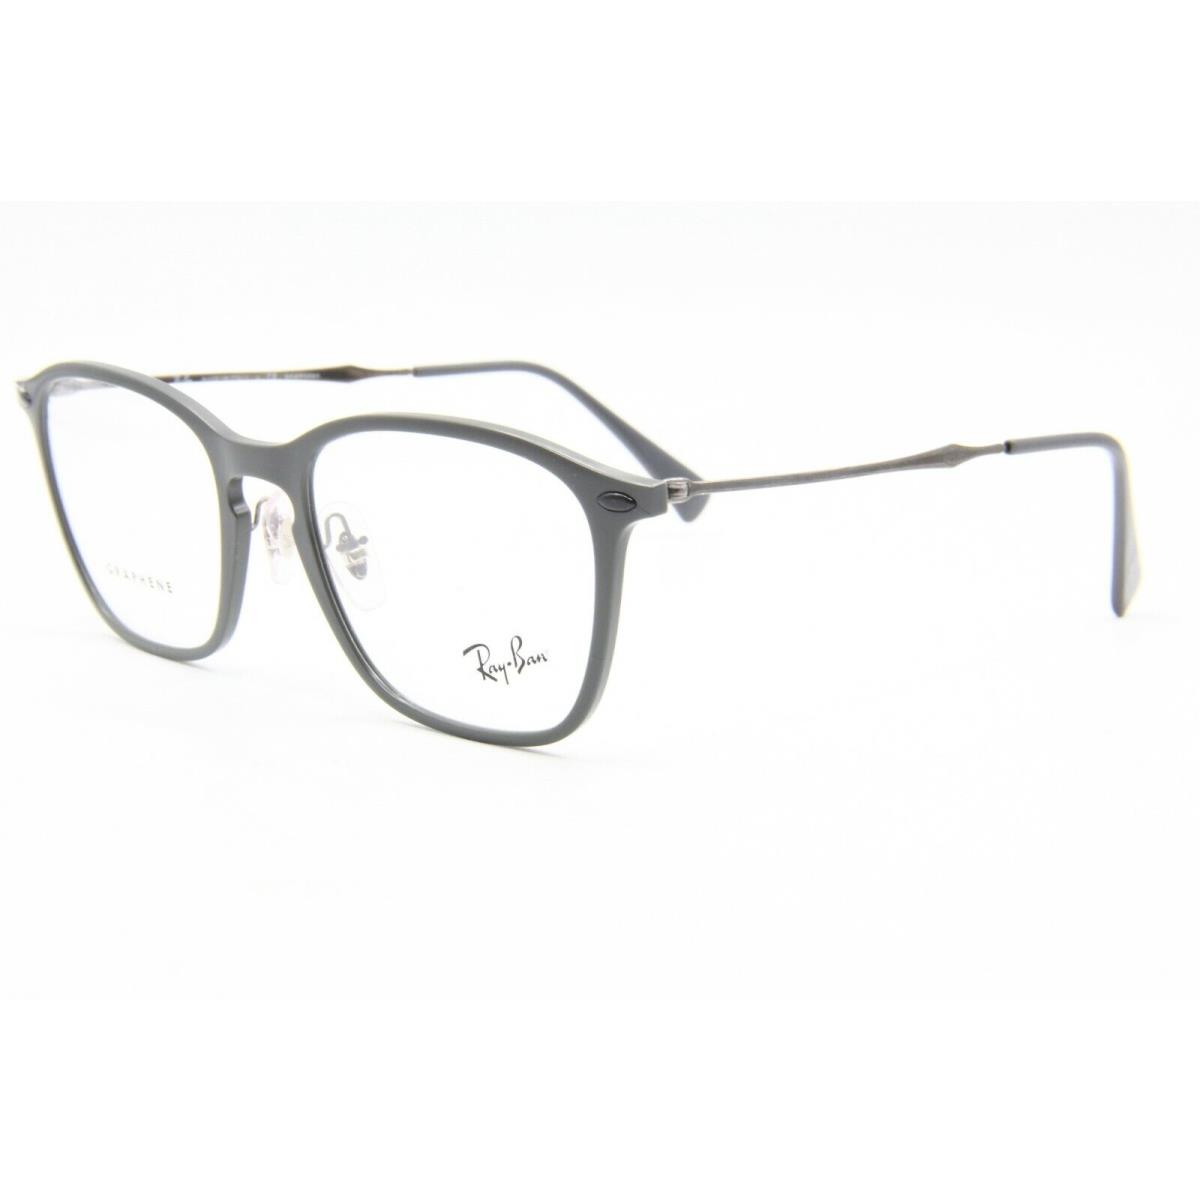 Ray-ban Ray Ban RB 8955 5757 Gray Eyeglasses Frame RB8955 RX 53-19